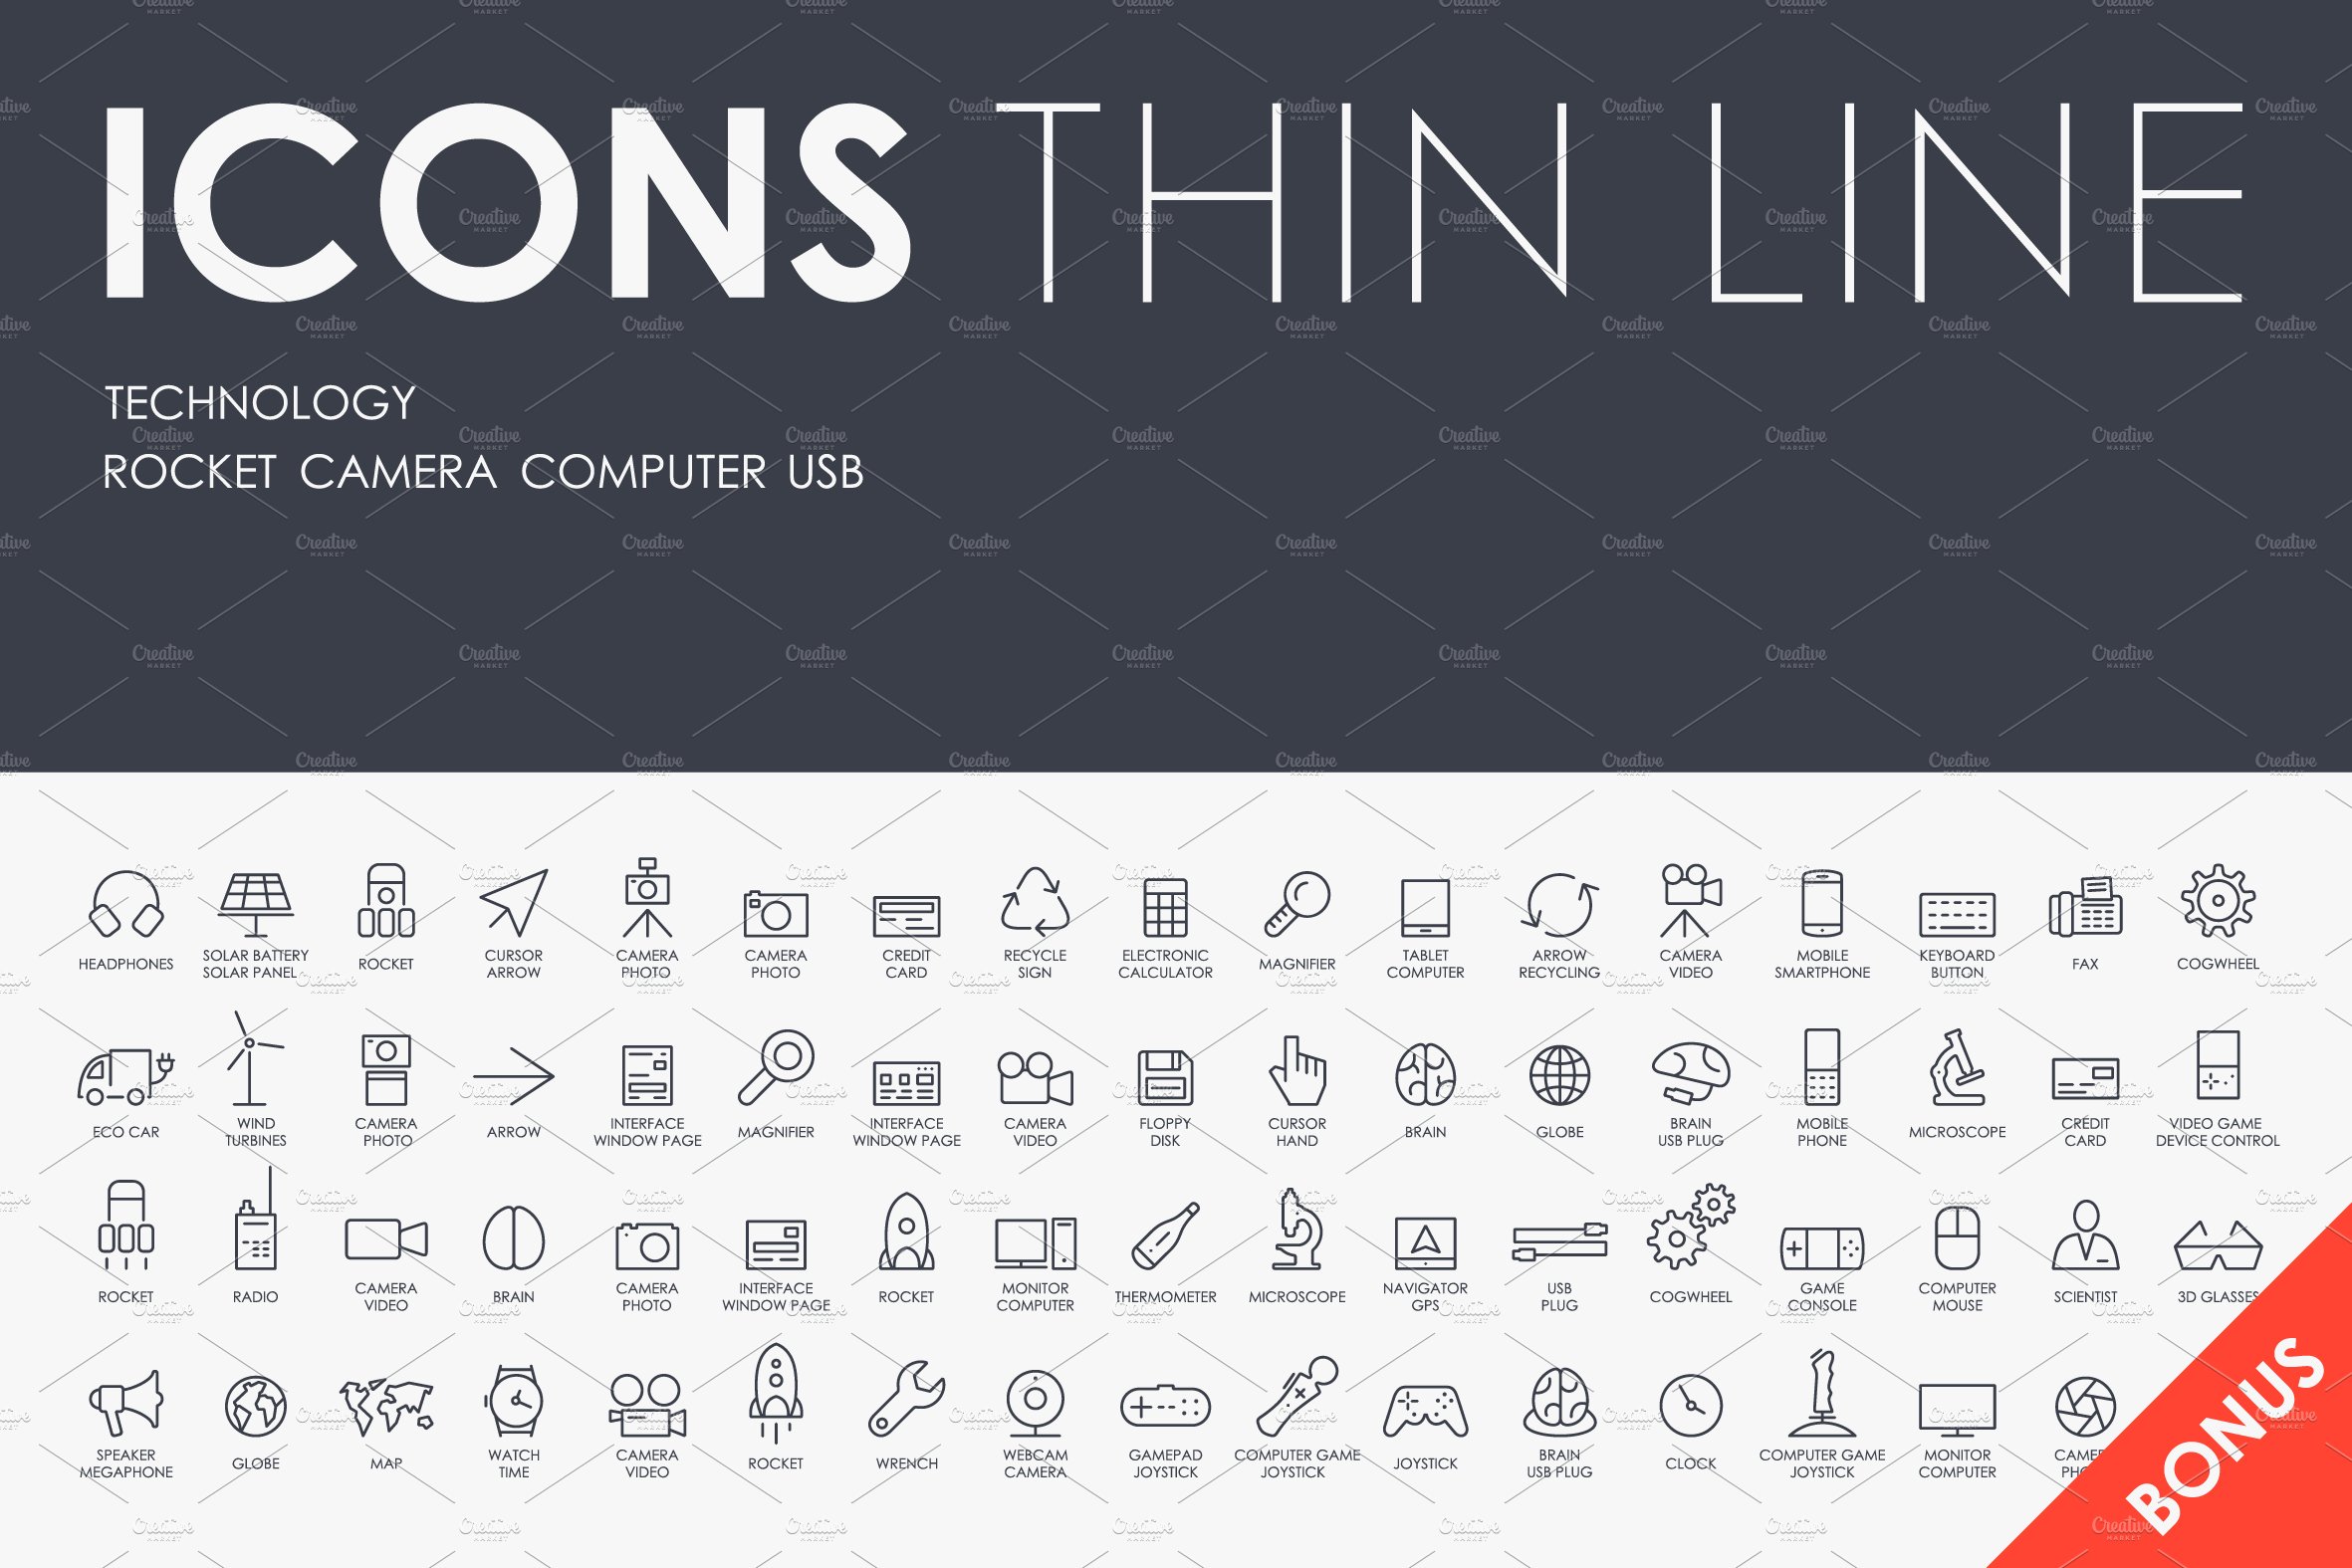 Technology thinline icons + BONUS cover image.